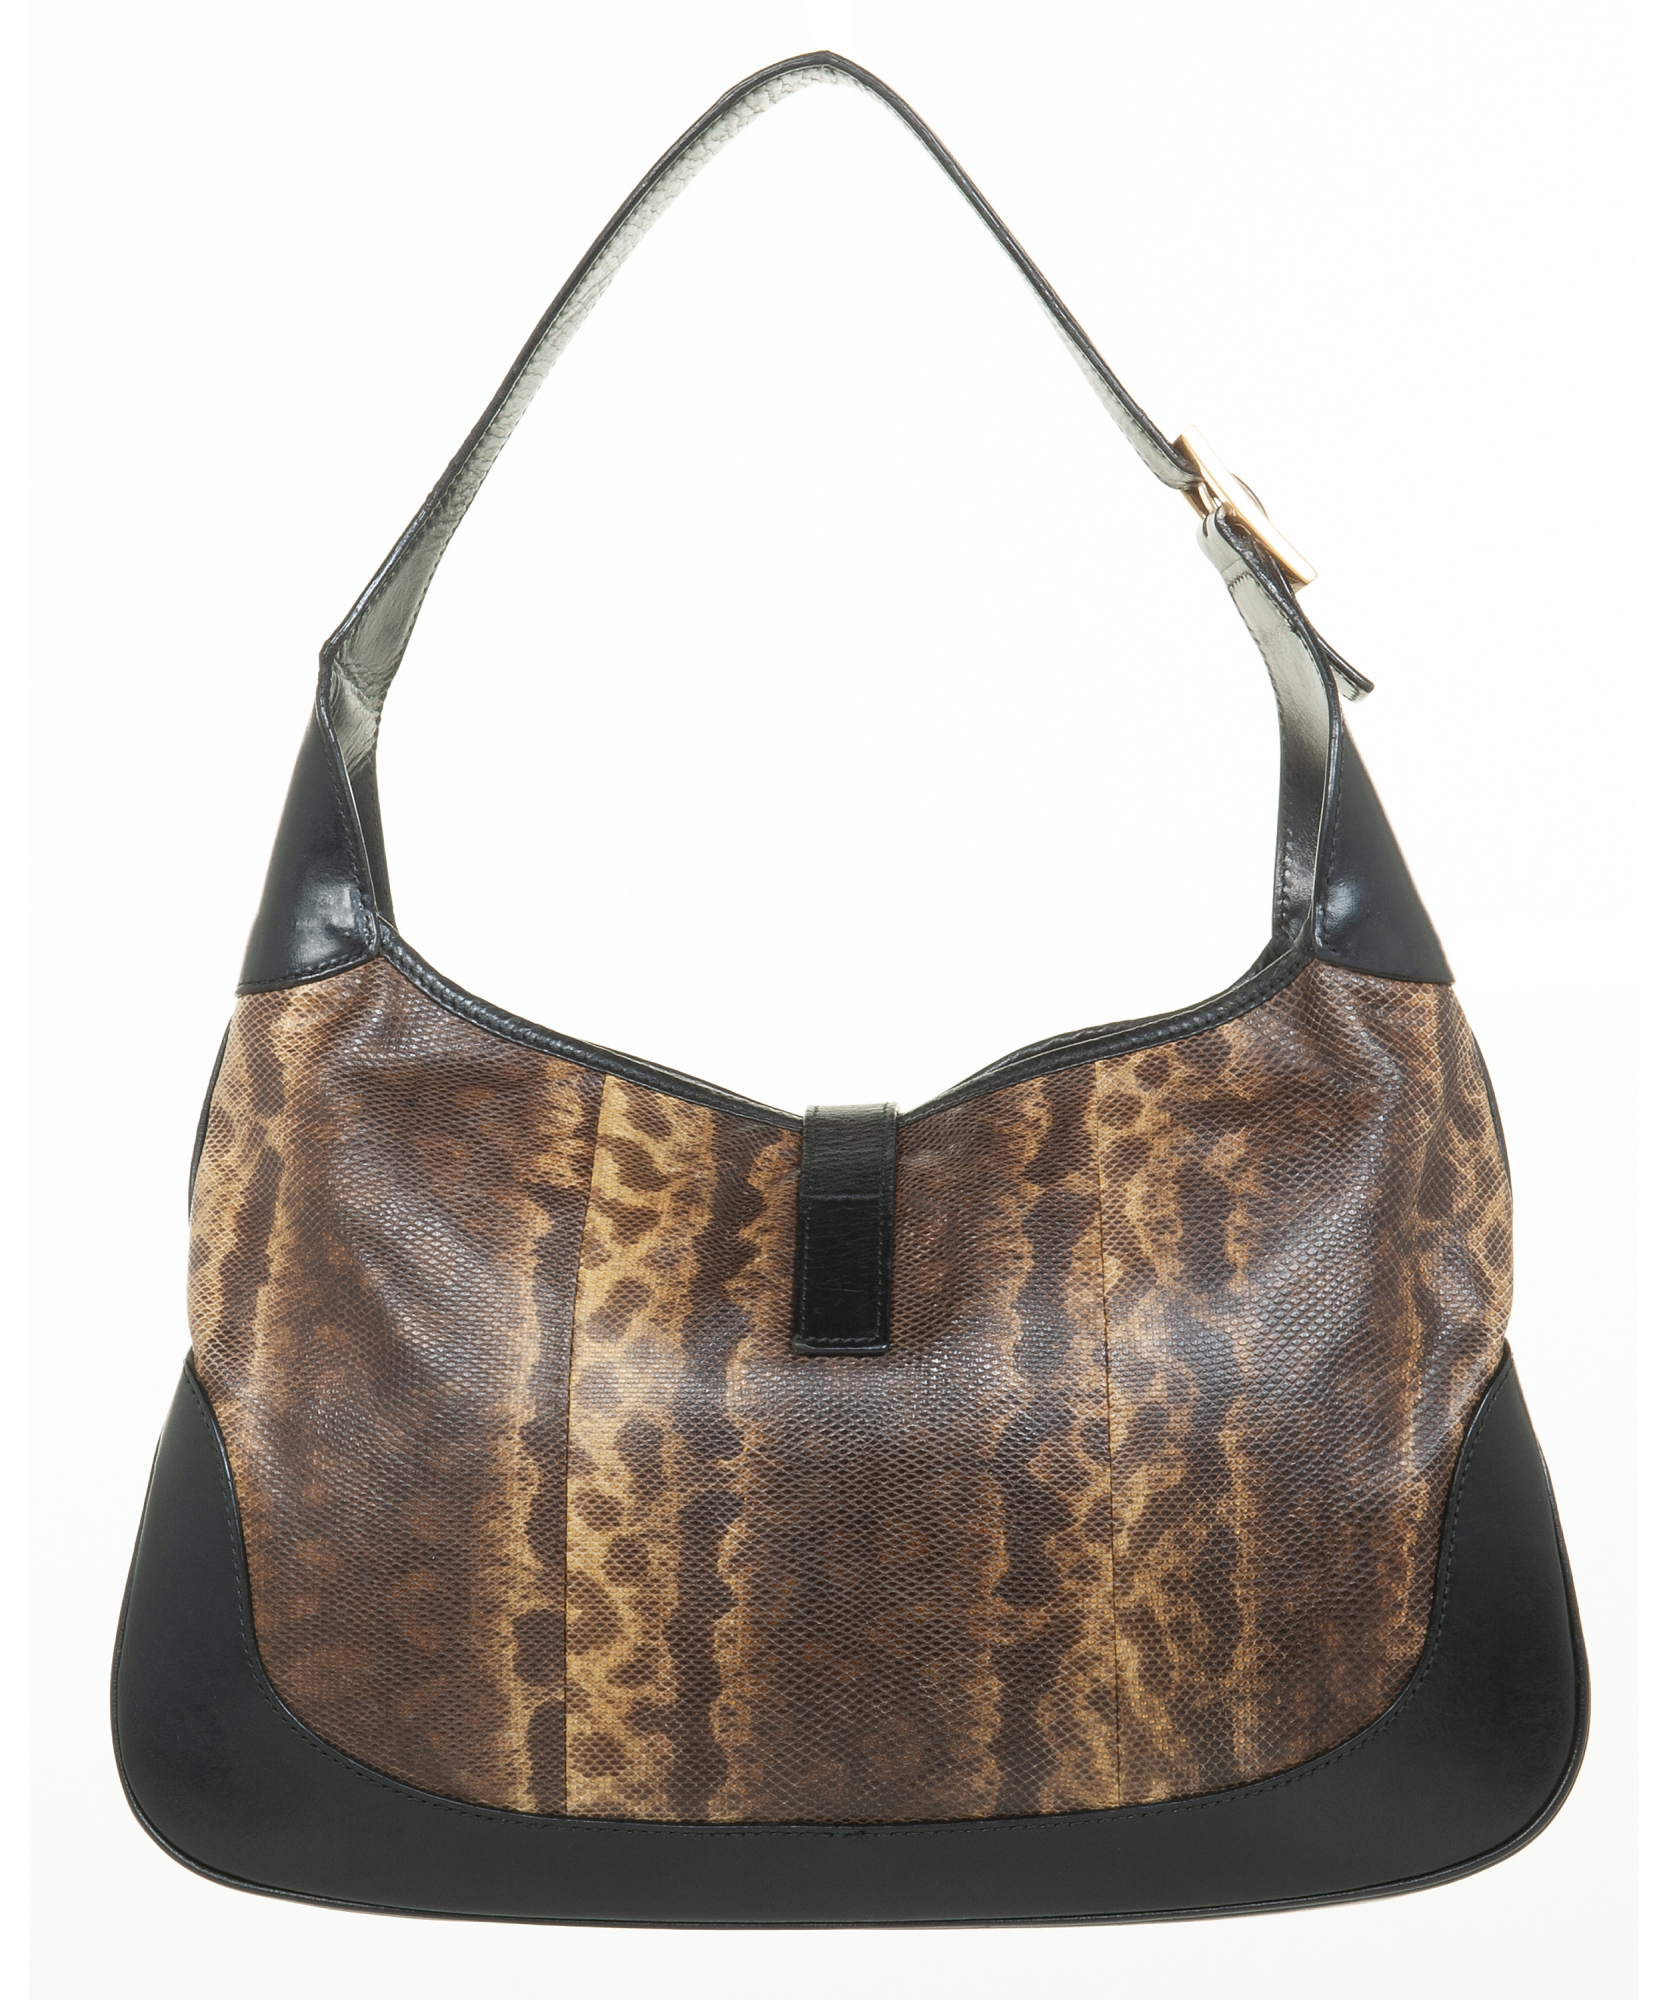 Gucci Handbags Collection & more | Gucci snake bag, Leather handbags  crossbody, Bags